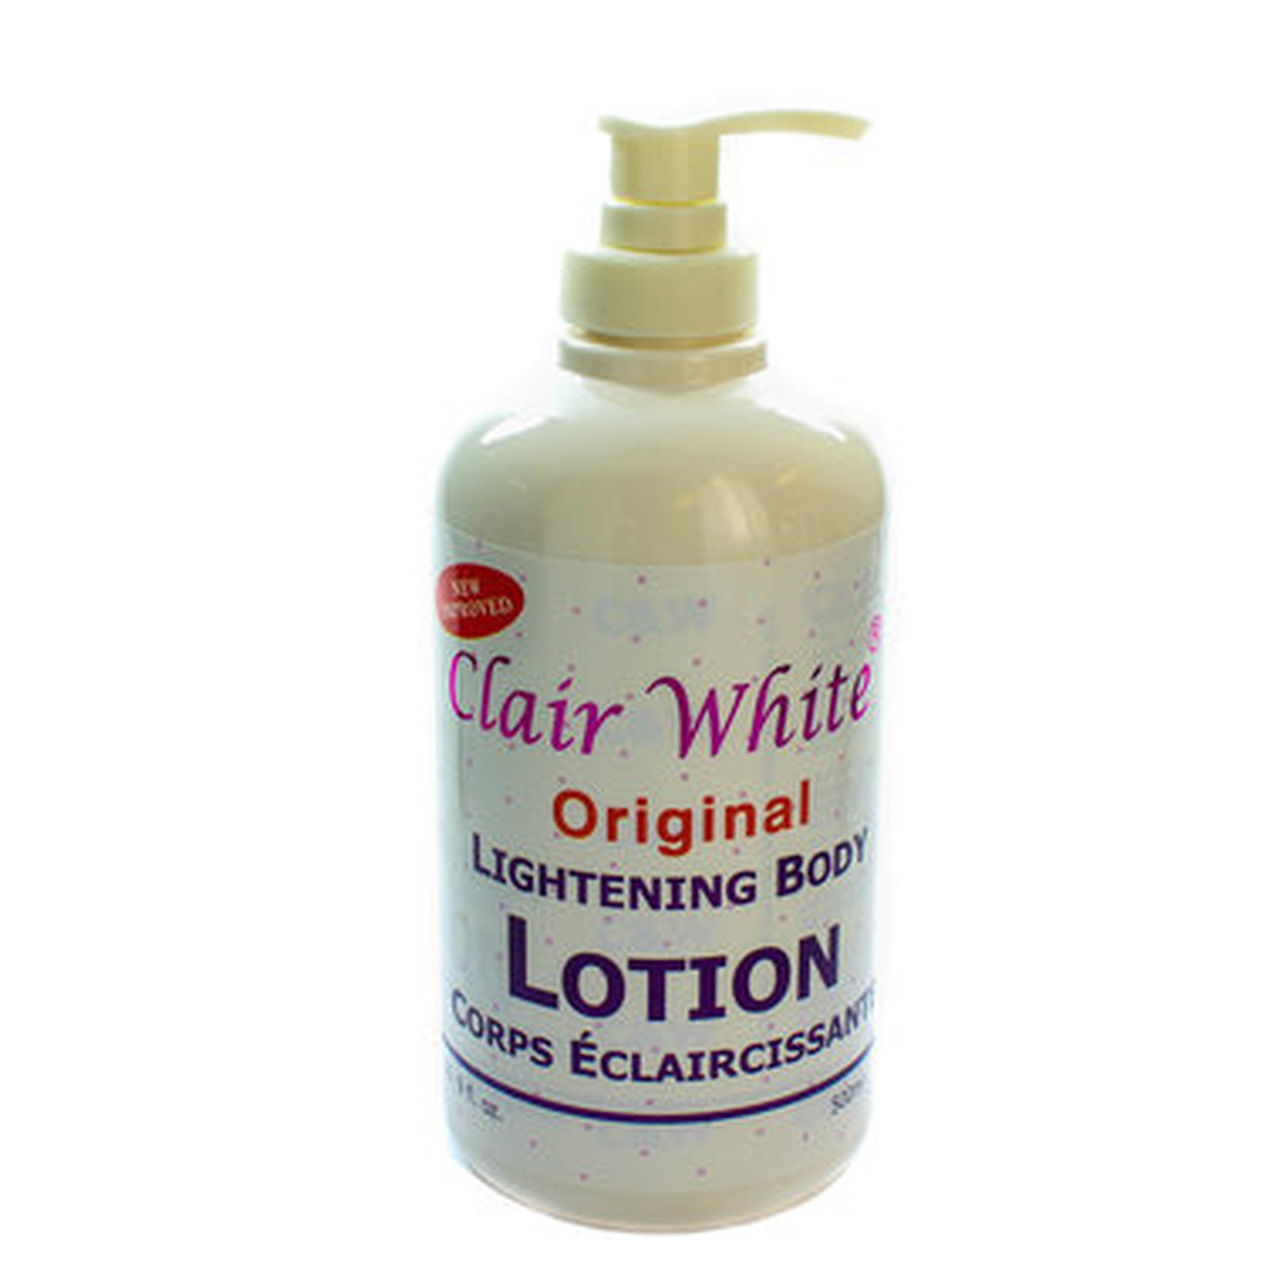 CLAIR WHITE® ORIGINAL Lightening Body LOTION. 